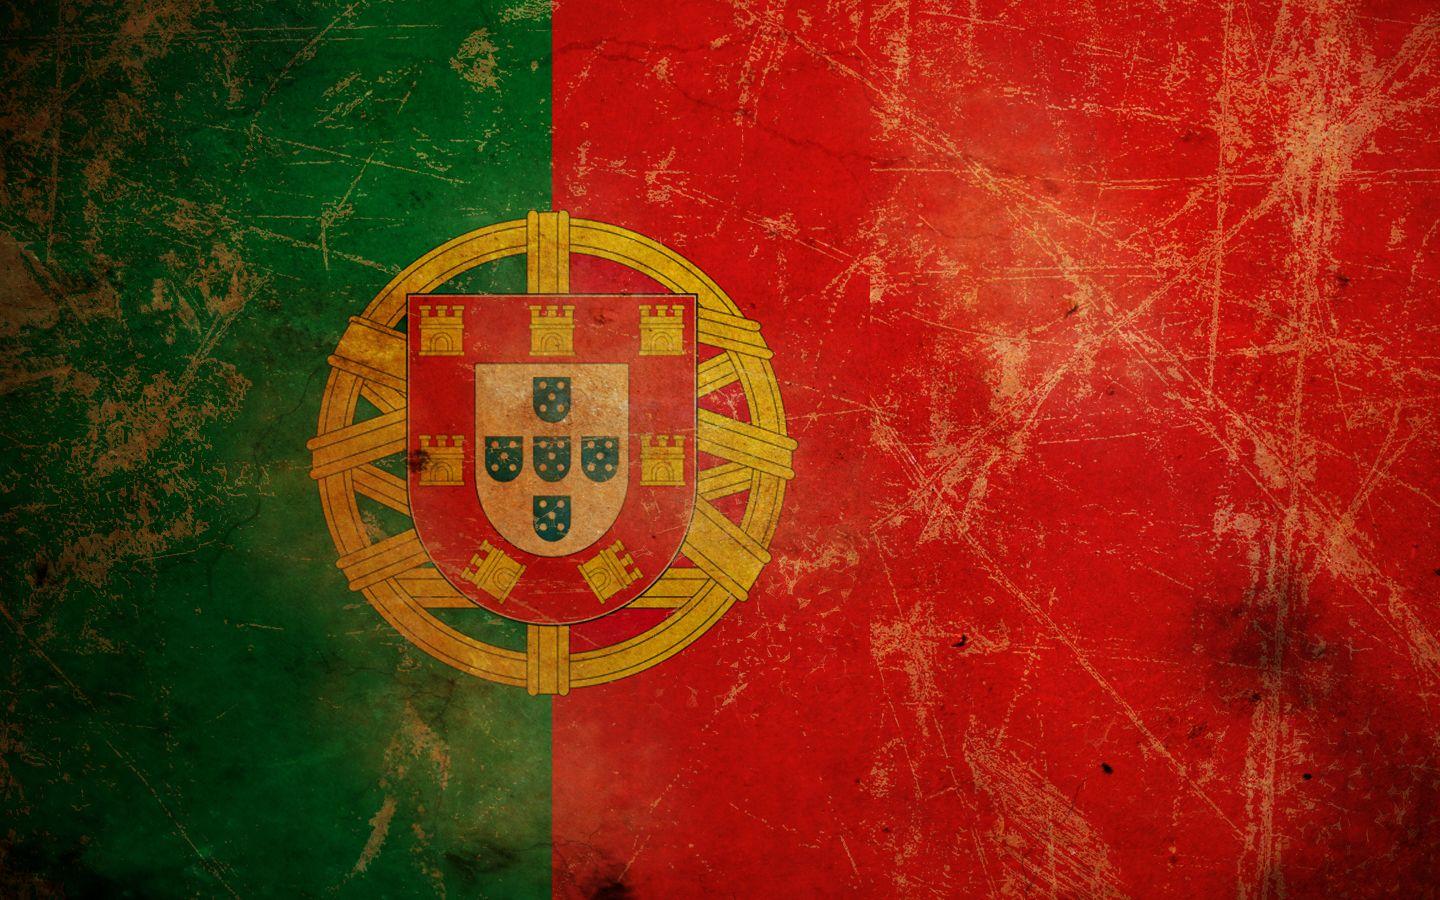 Portug HD Wallpaper, Background Image